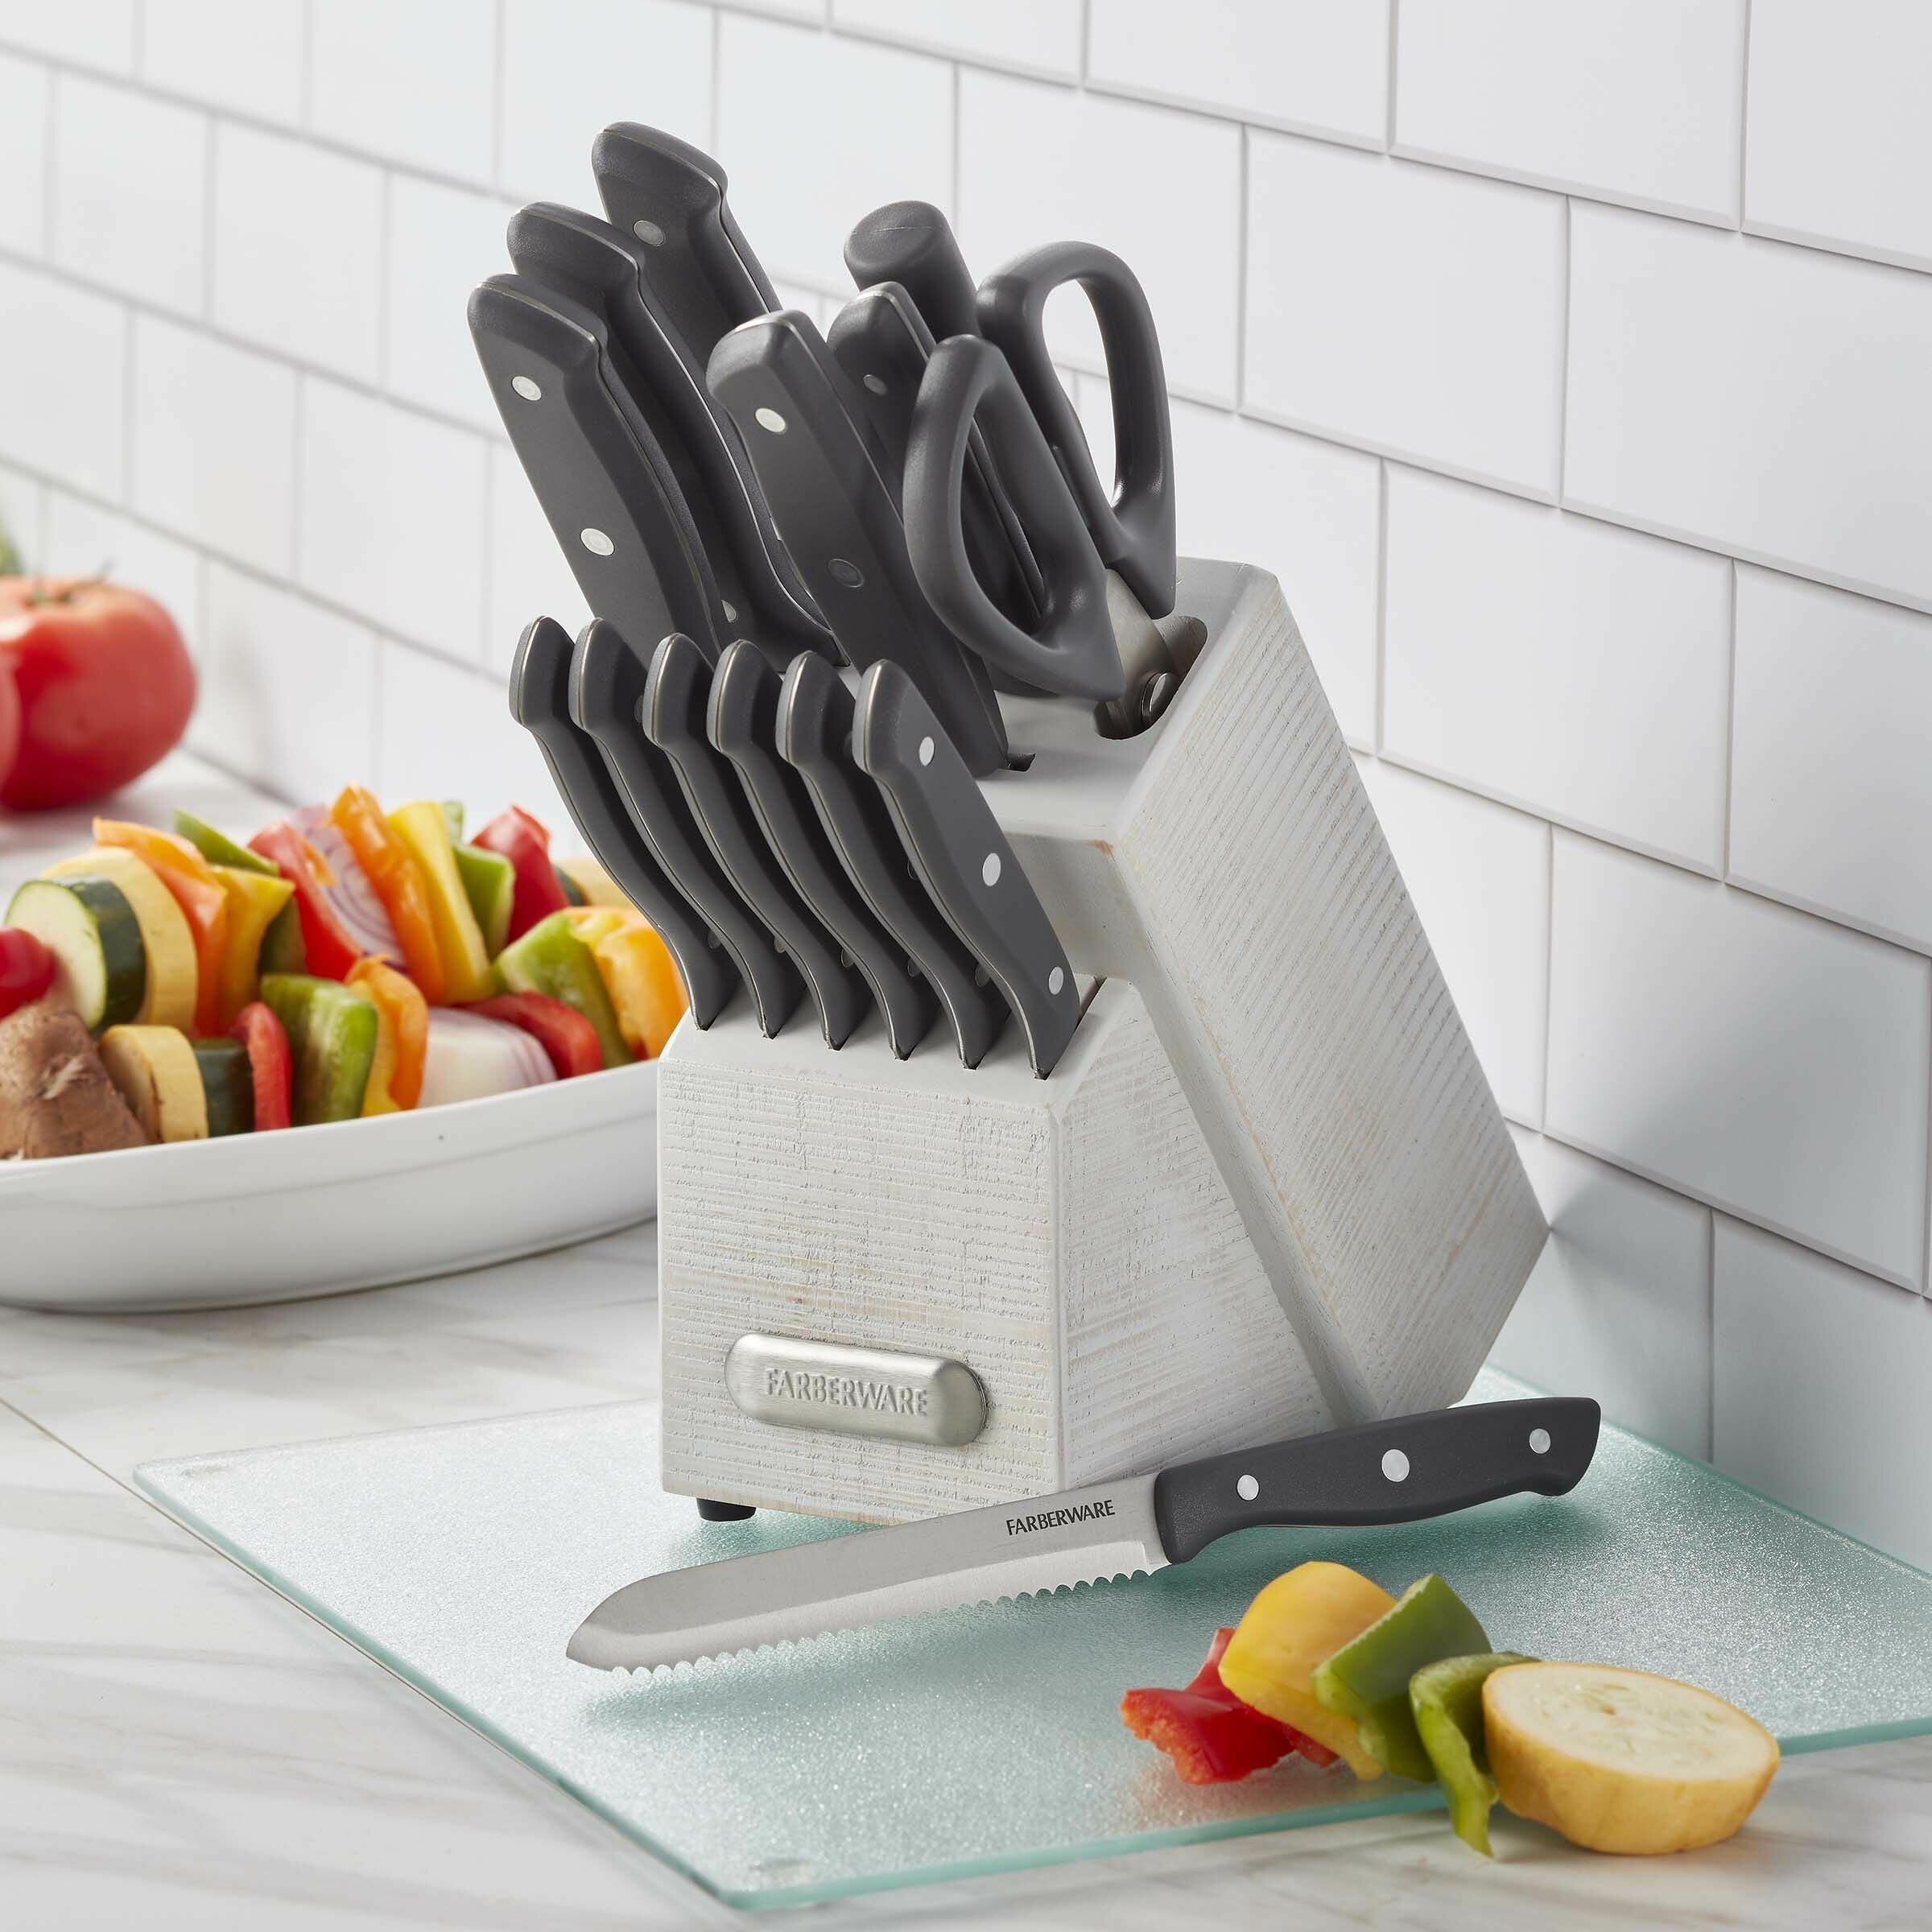 22 Piece Farberware Knife Cutlery Set and Block with Bonus Items